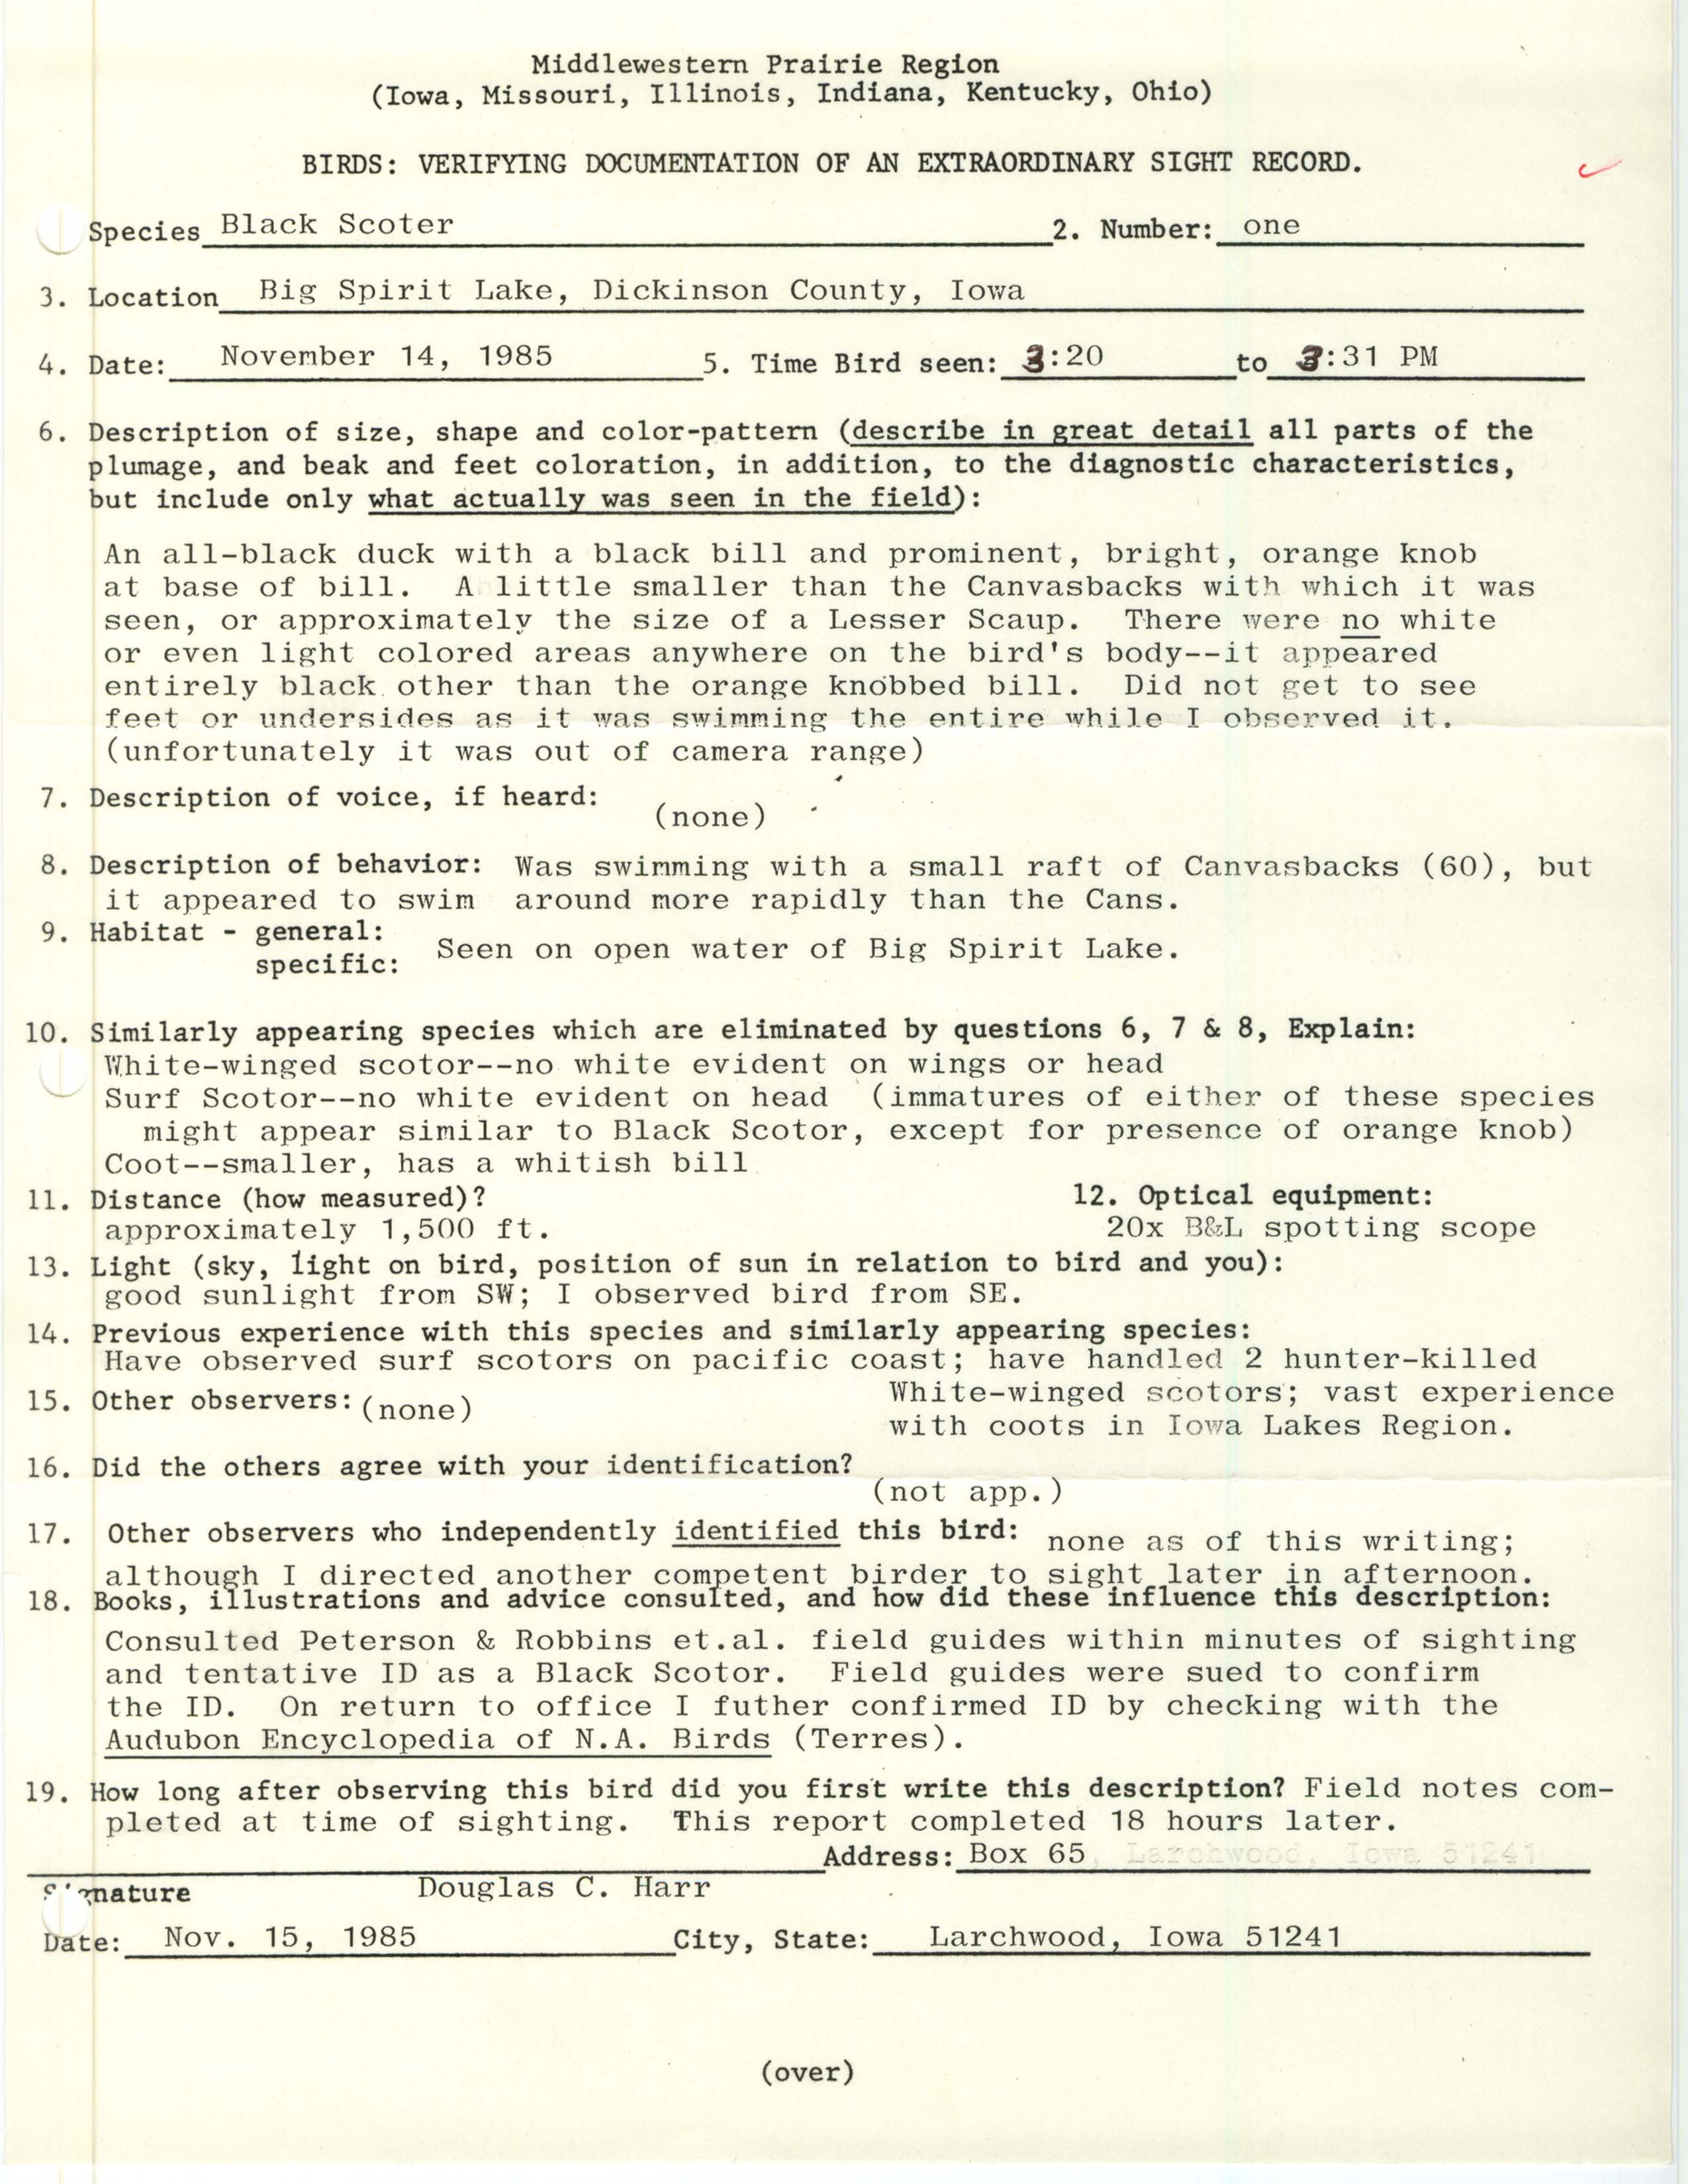 Rare bird documentation form for Black Scoter at Big Spirit Lake, 1985